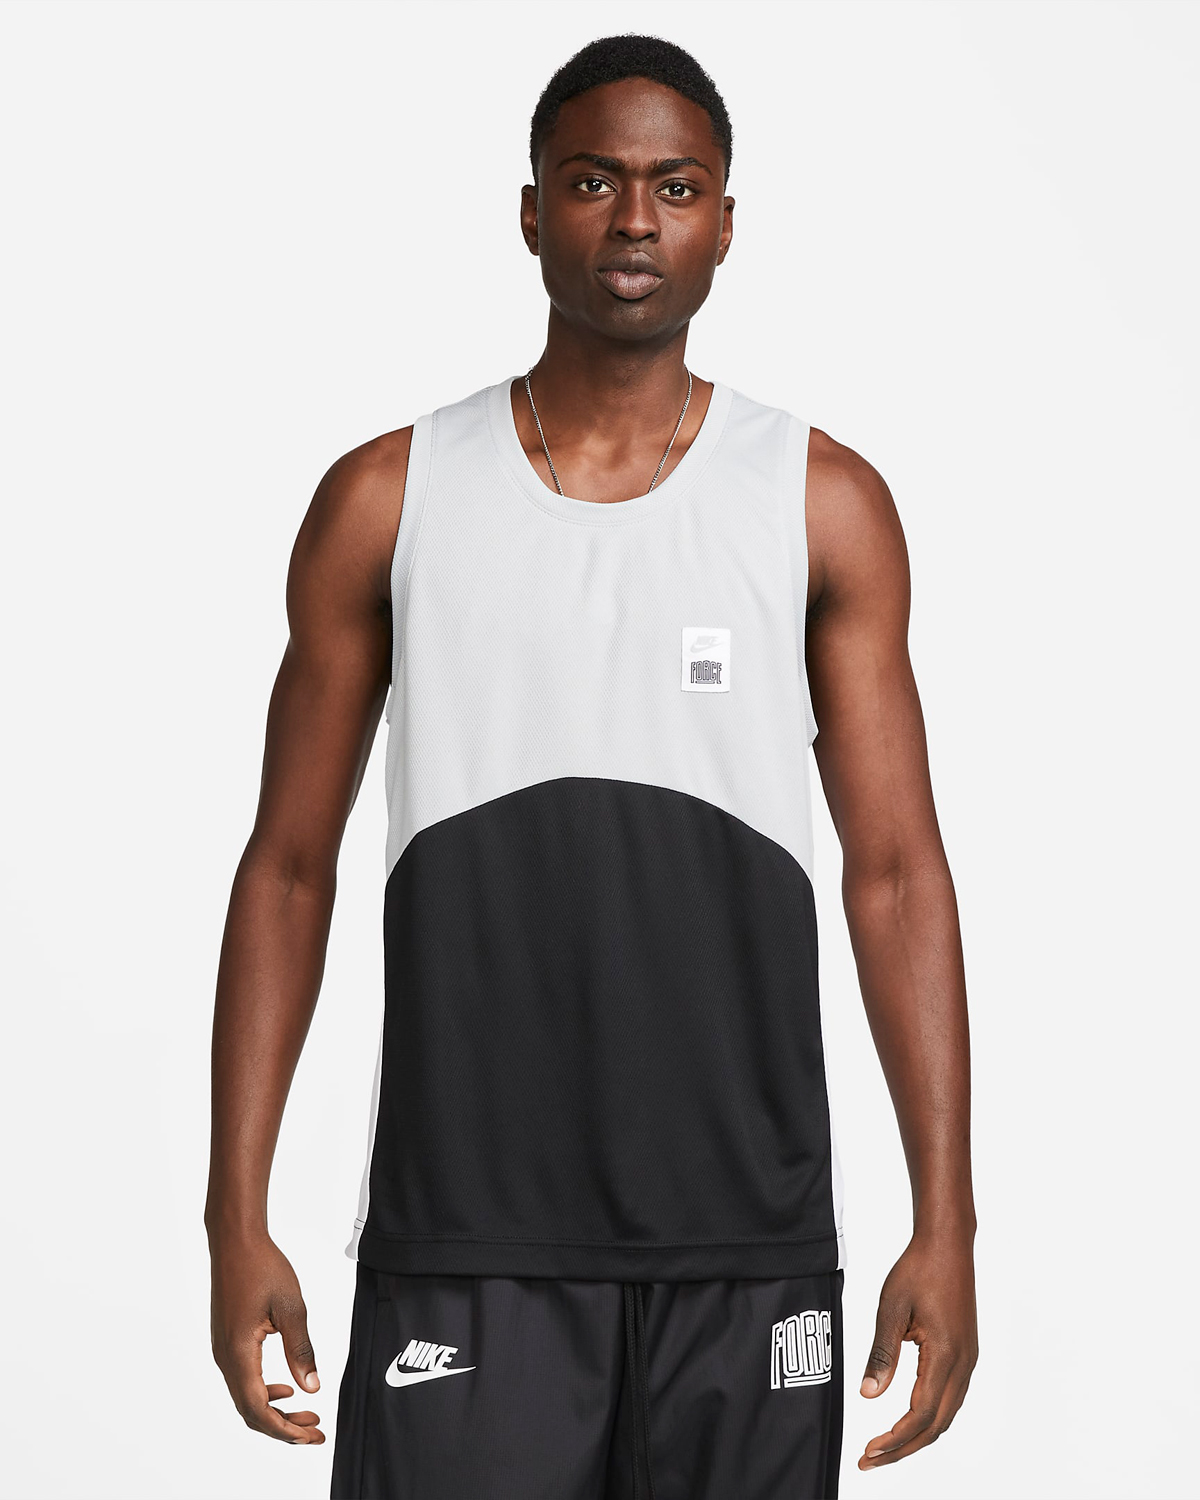 Nike-Starting-5-Basketball-Jersey-Light-Smoke-Grey-Black